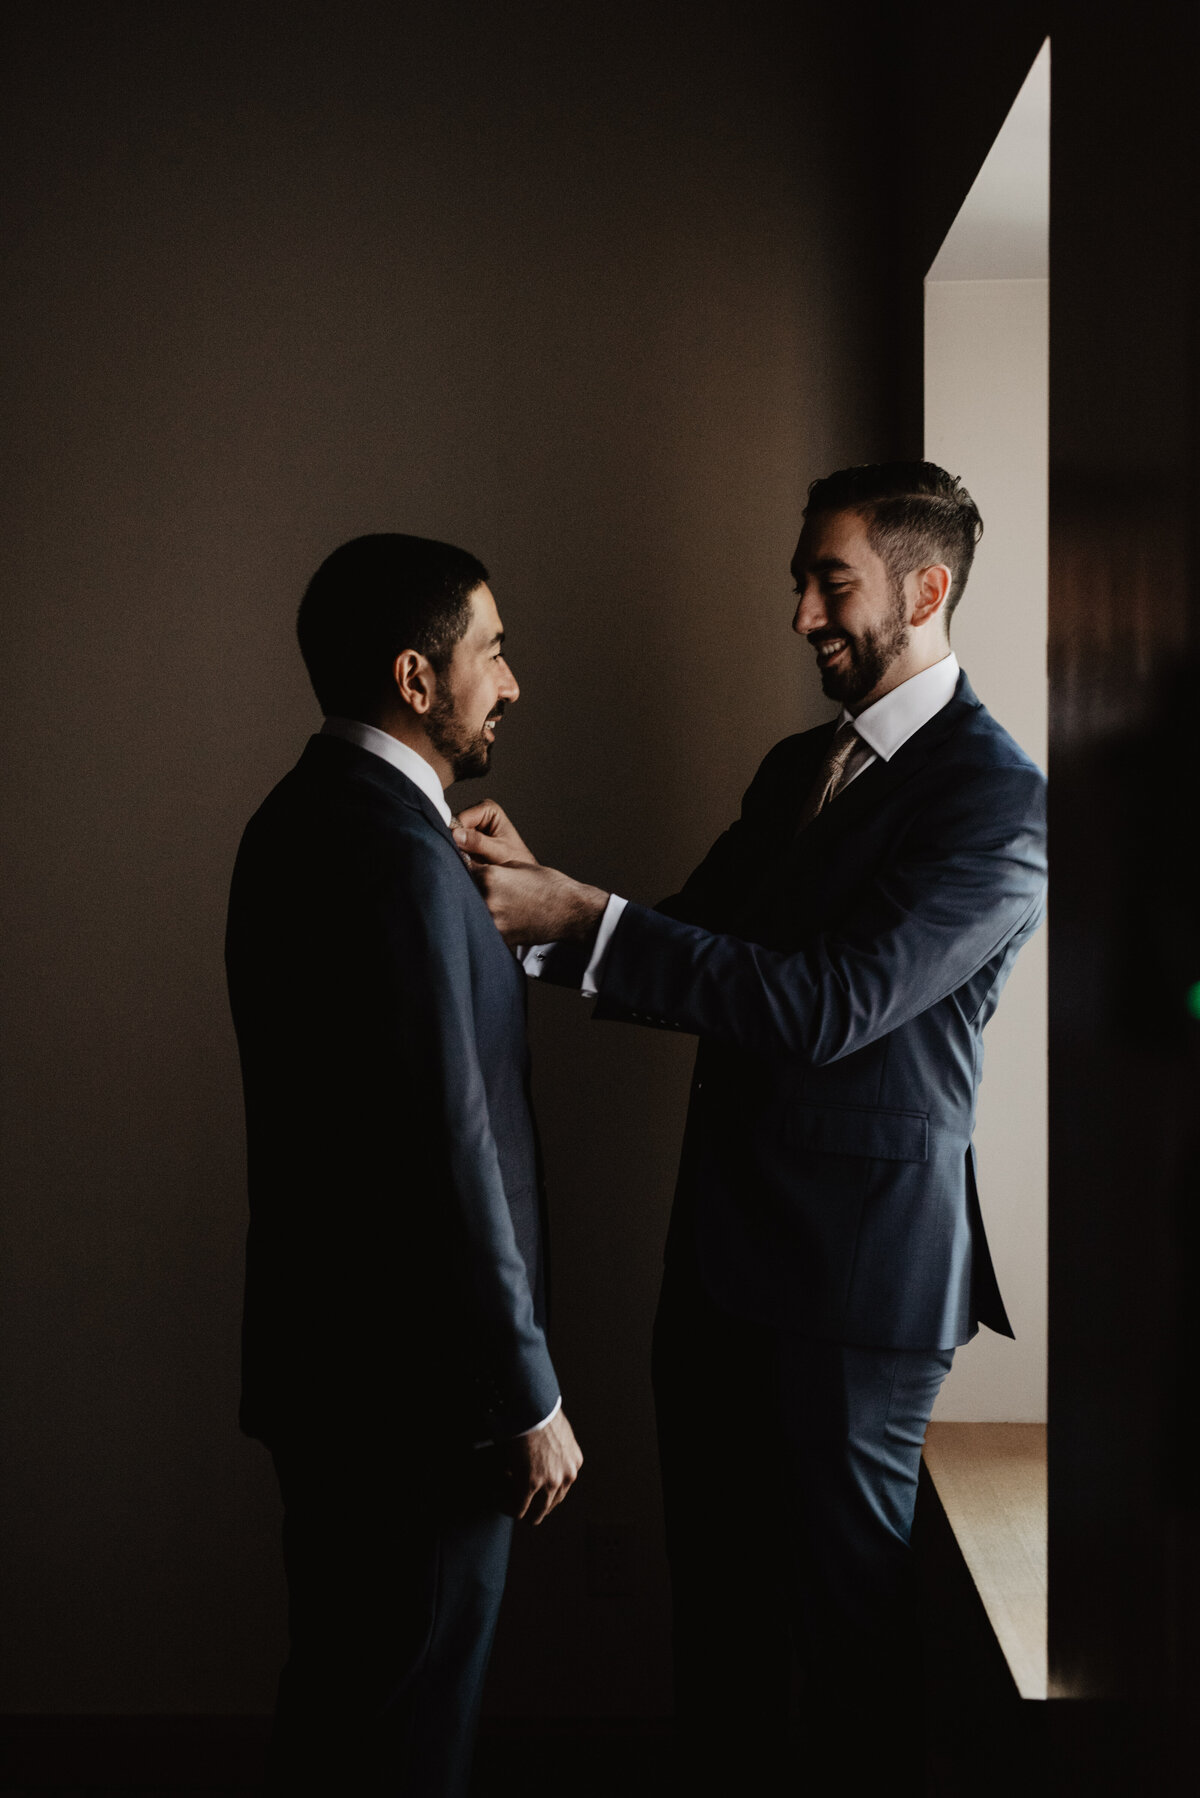 Photographers Jackson Hole capture groomsmen with groom